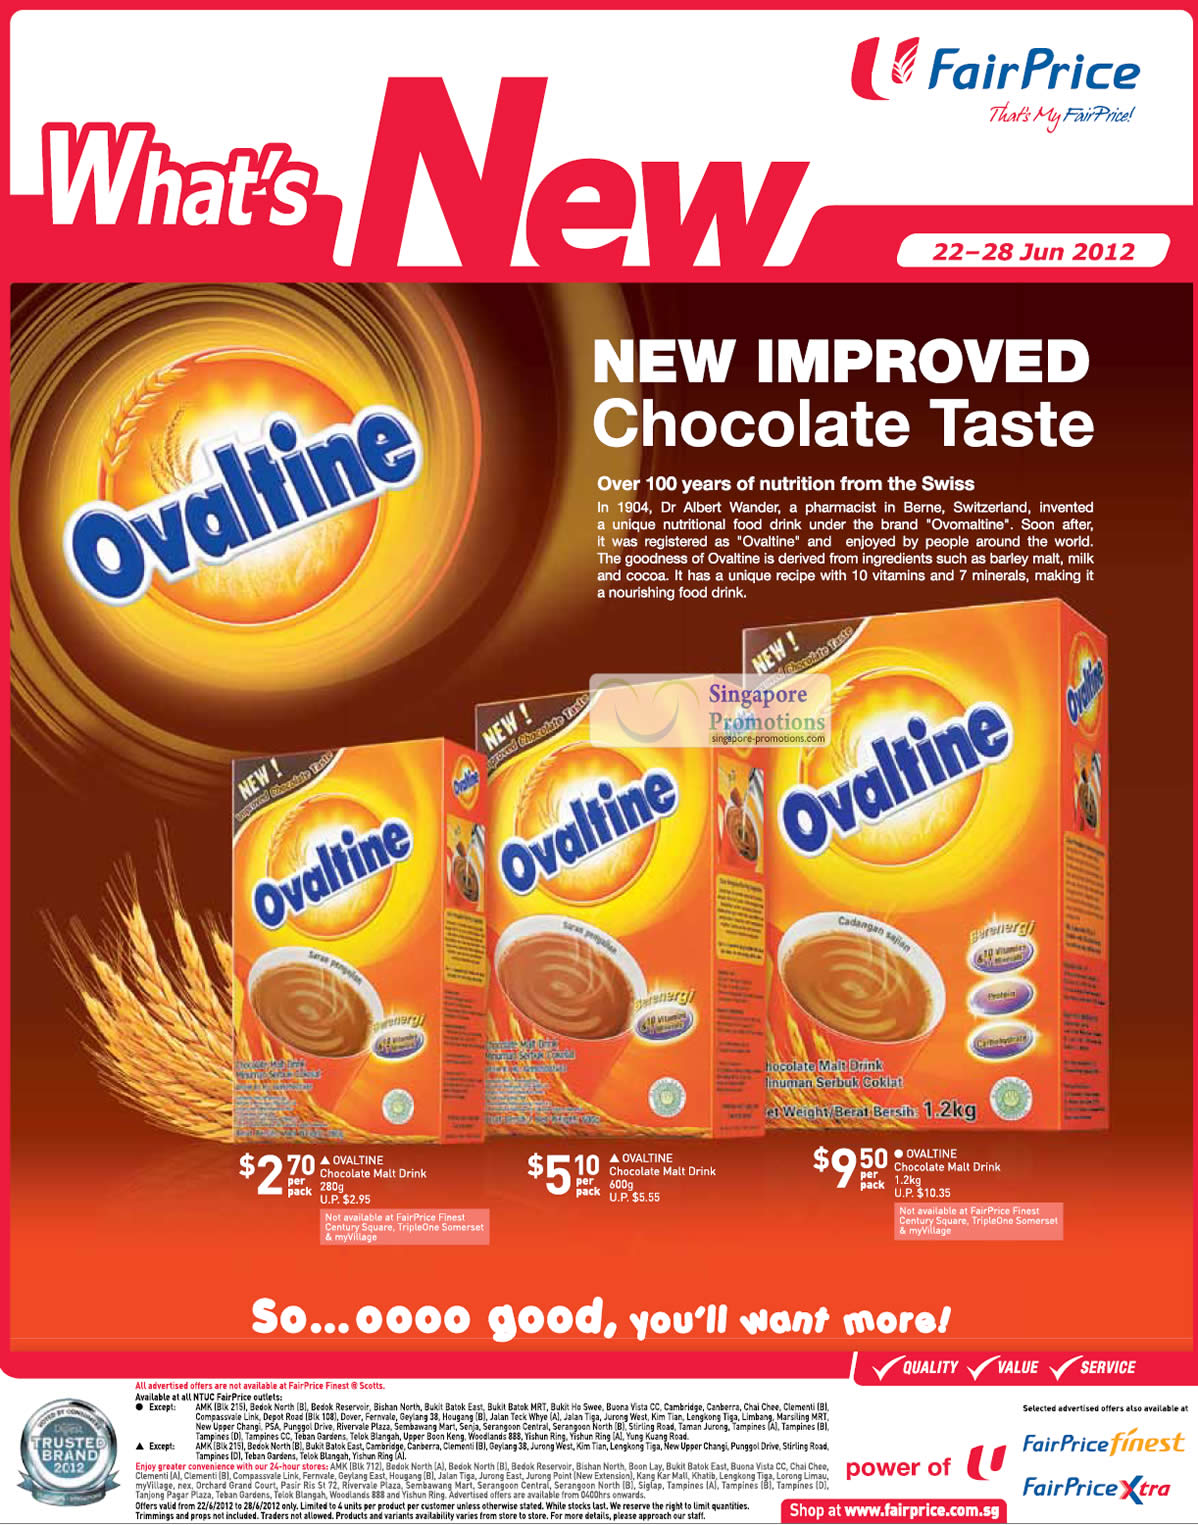 Ovaltine 22 Jun 2012 » Ovaltine New Improved Chocolate Taste 22 Jun